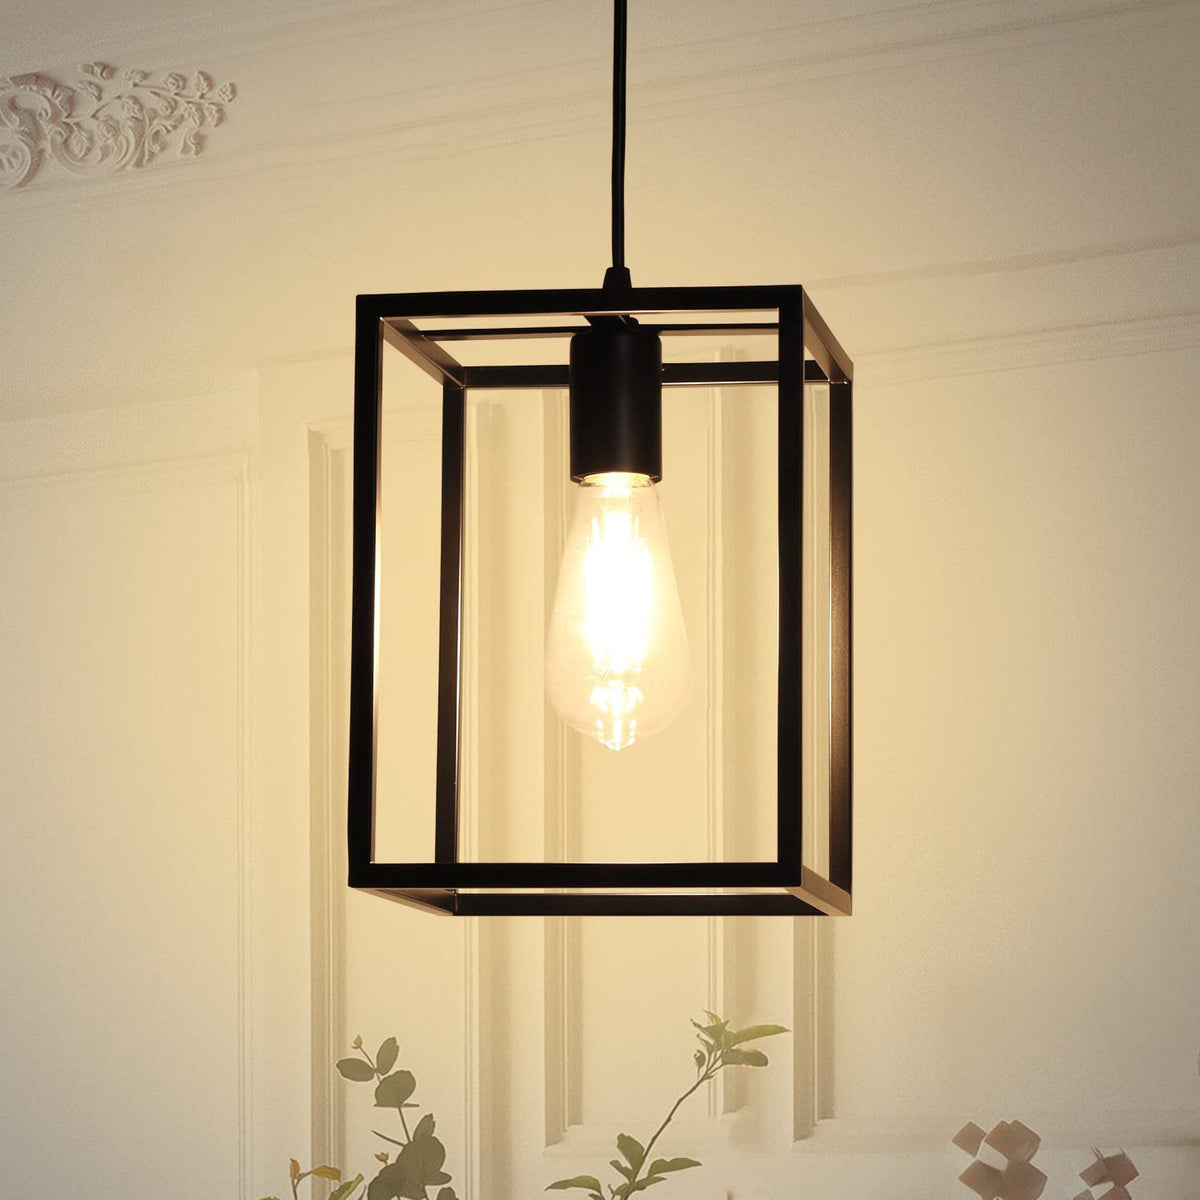 Depuley 1 Light Black Lantern Pendant Light Fixture, Depuley Rustic Hallway Chandelier Lighting with Adjustable Cord, Rectangle Metal Cage Hanging Lights - WSCDD25-B 1 | Depuley